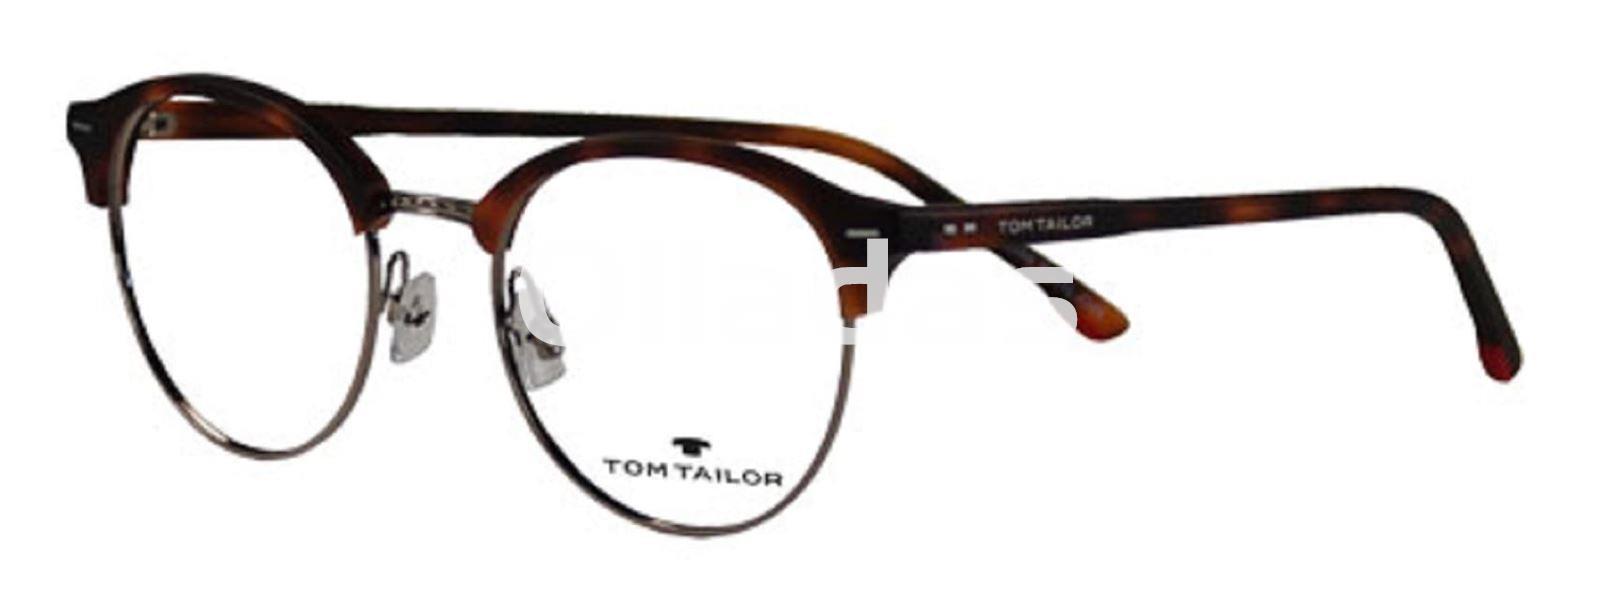 Tom Tailor 60464. - Imagen 1